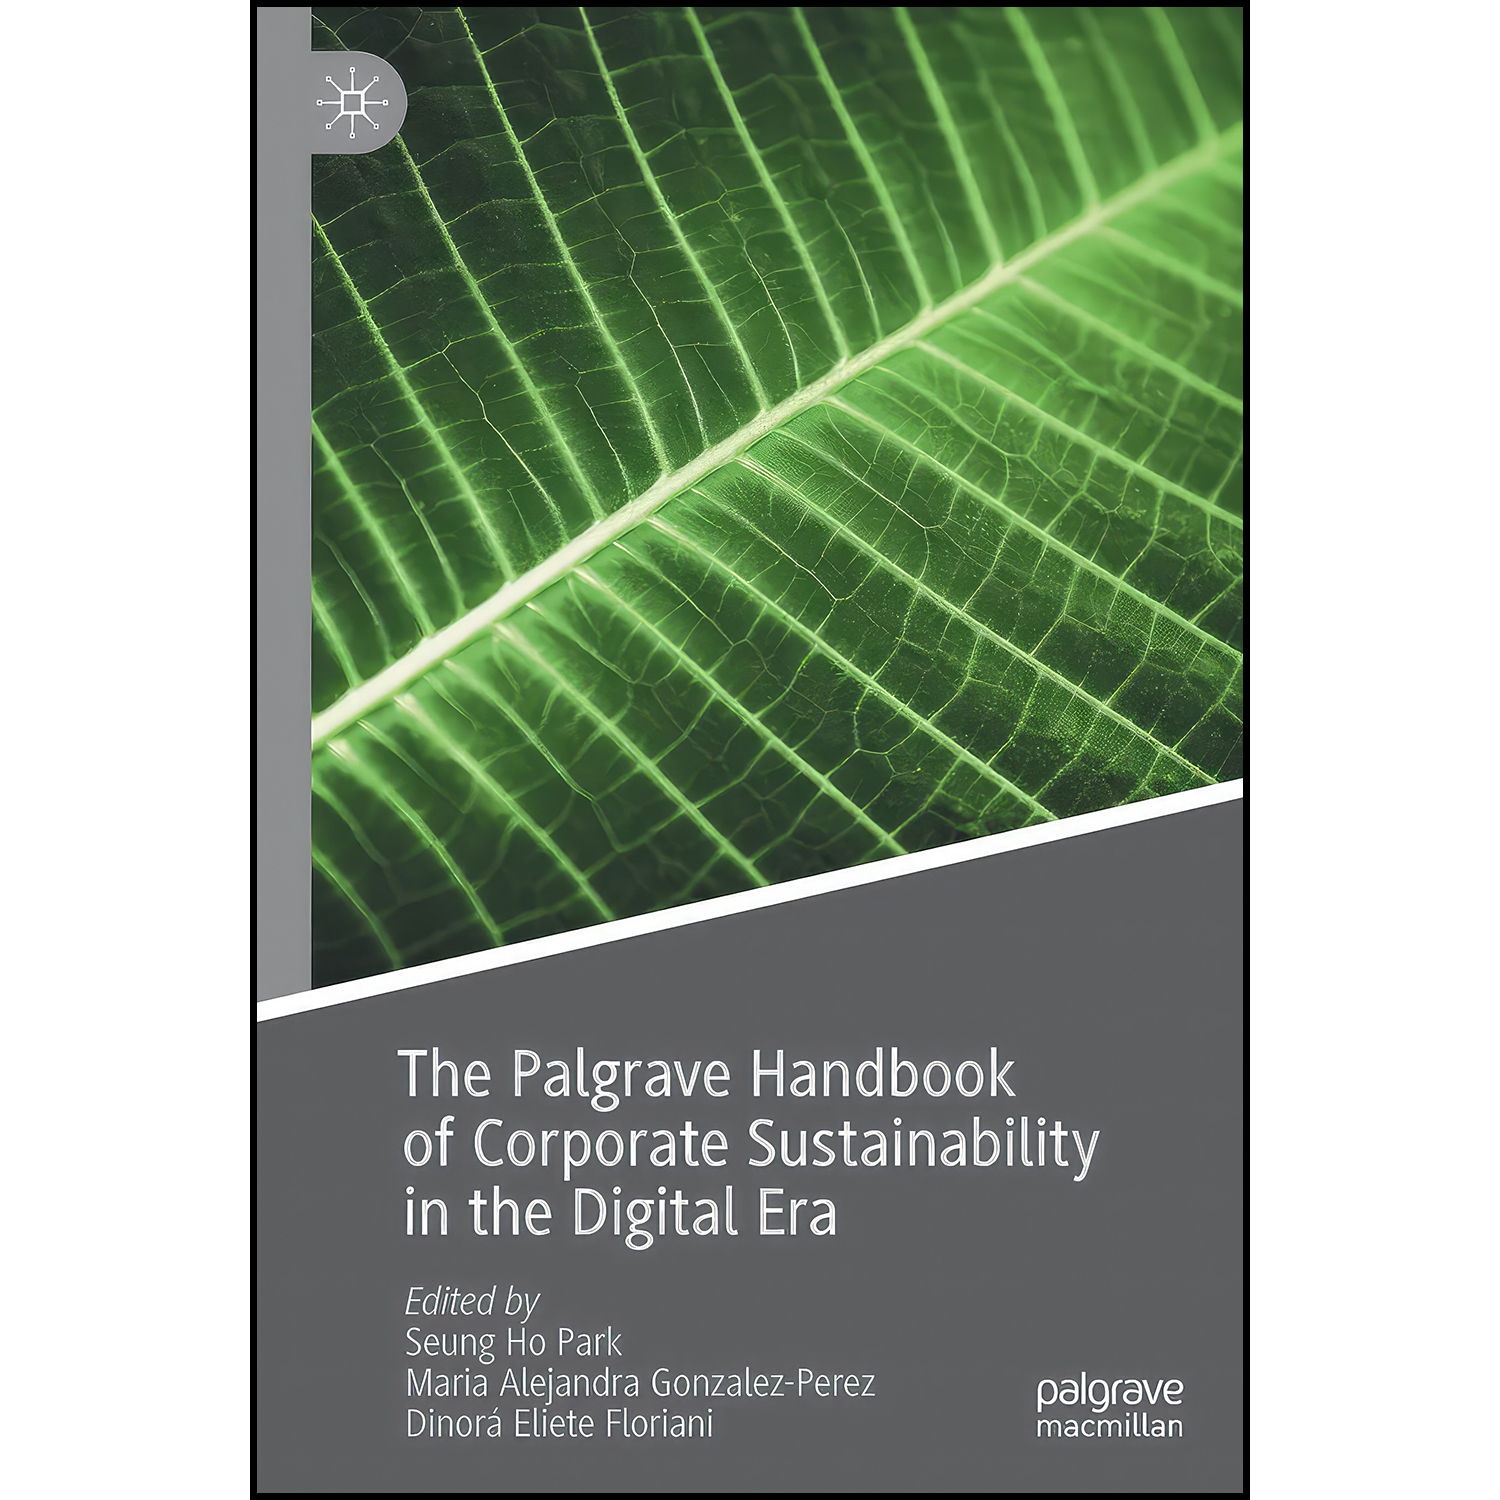 کتاب The Palgrave Handbook of Corporate Sustainability in the Digital Era اثر جمعي از نويسندگان انتشارات Palgrave Macmillan